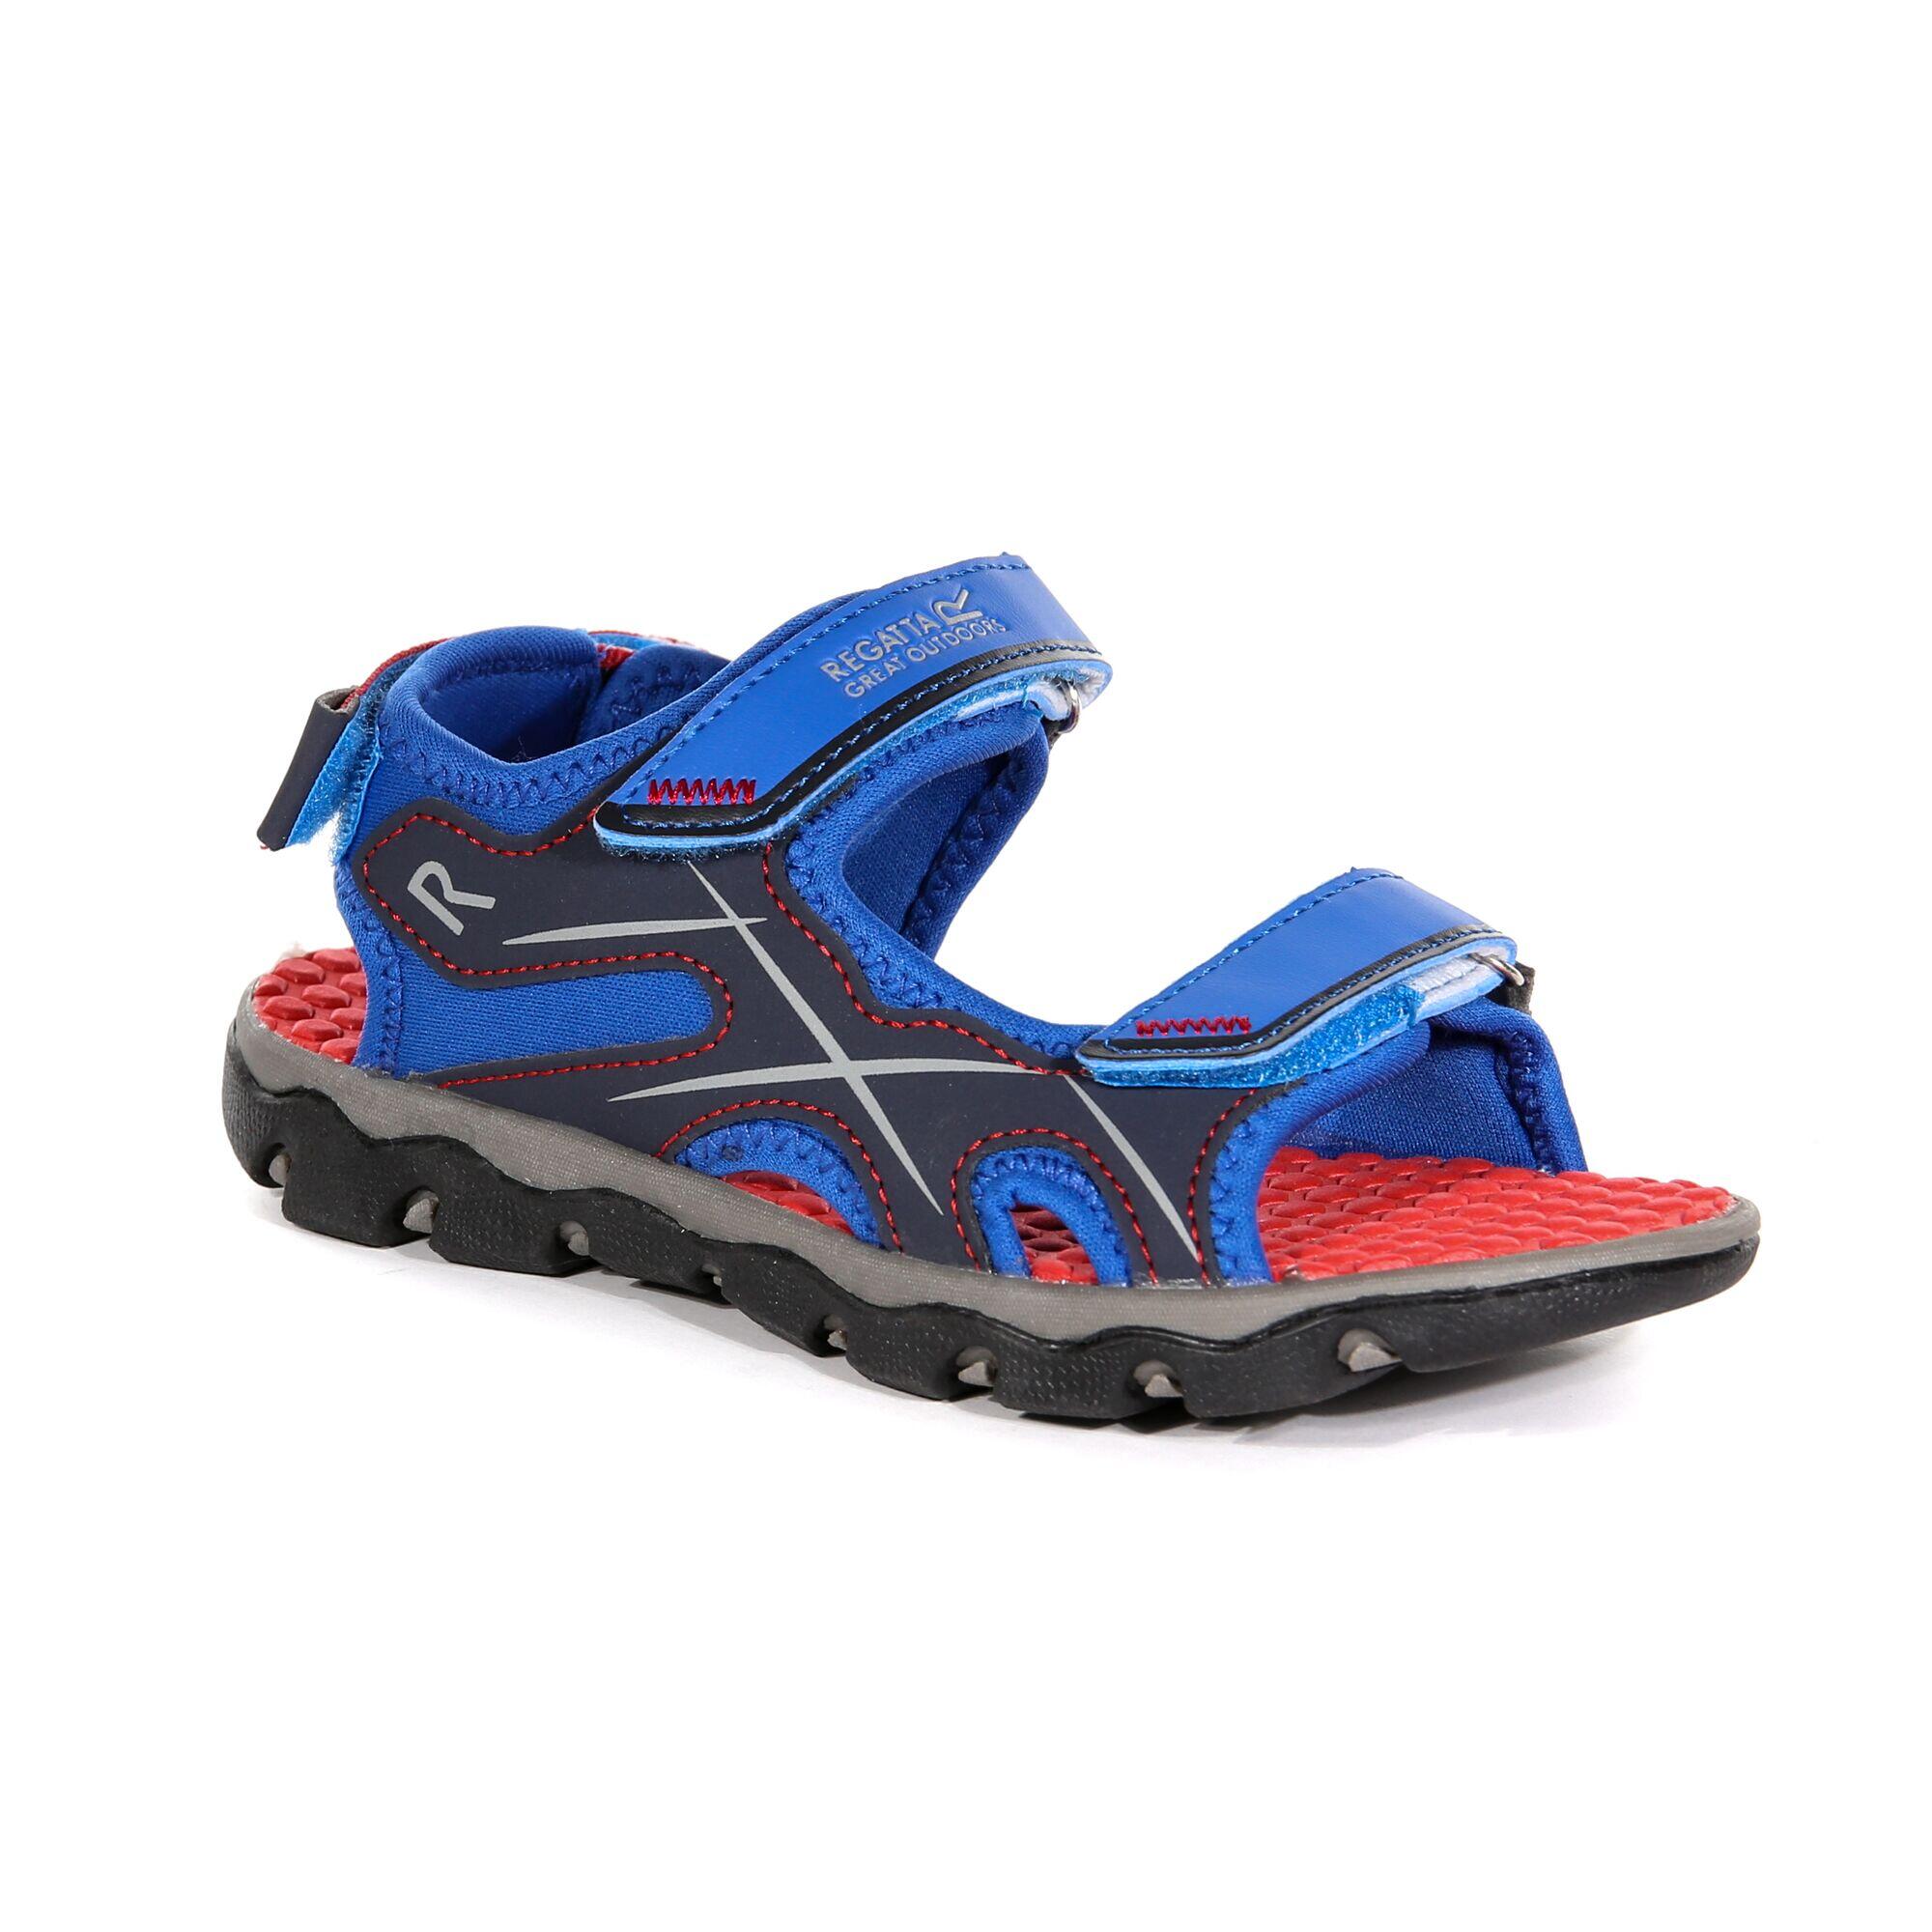 Kota Drift Junior Kids Walking Sandals - Oxford Blue Pepper 2/7